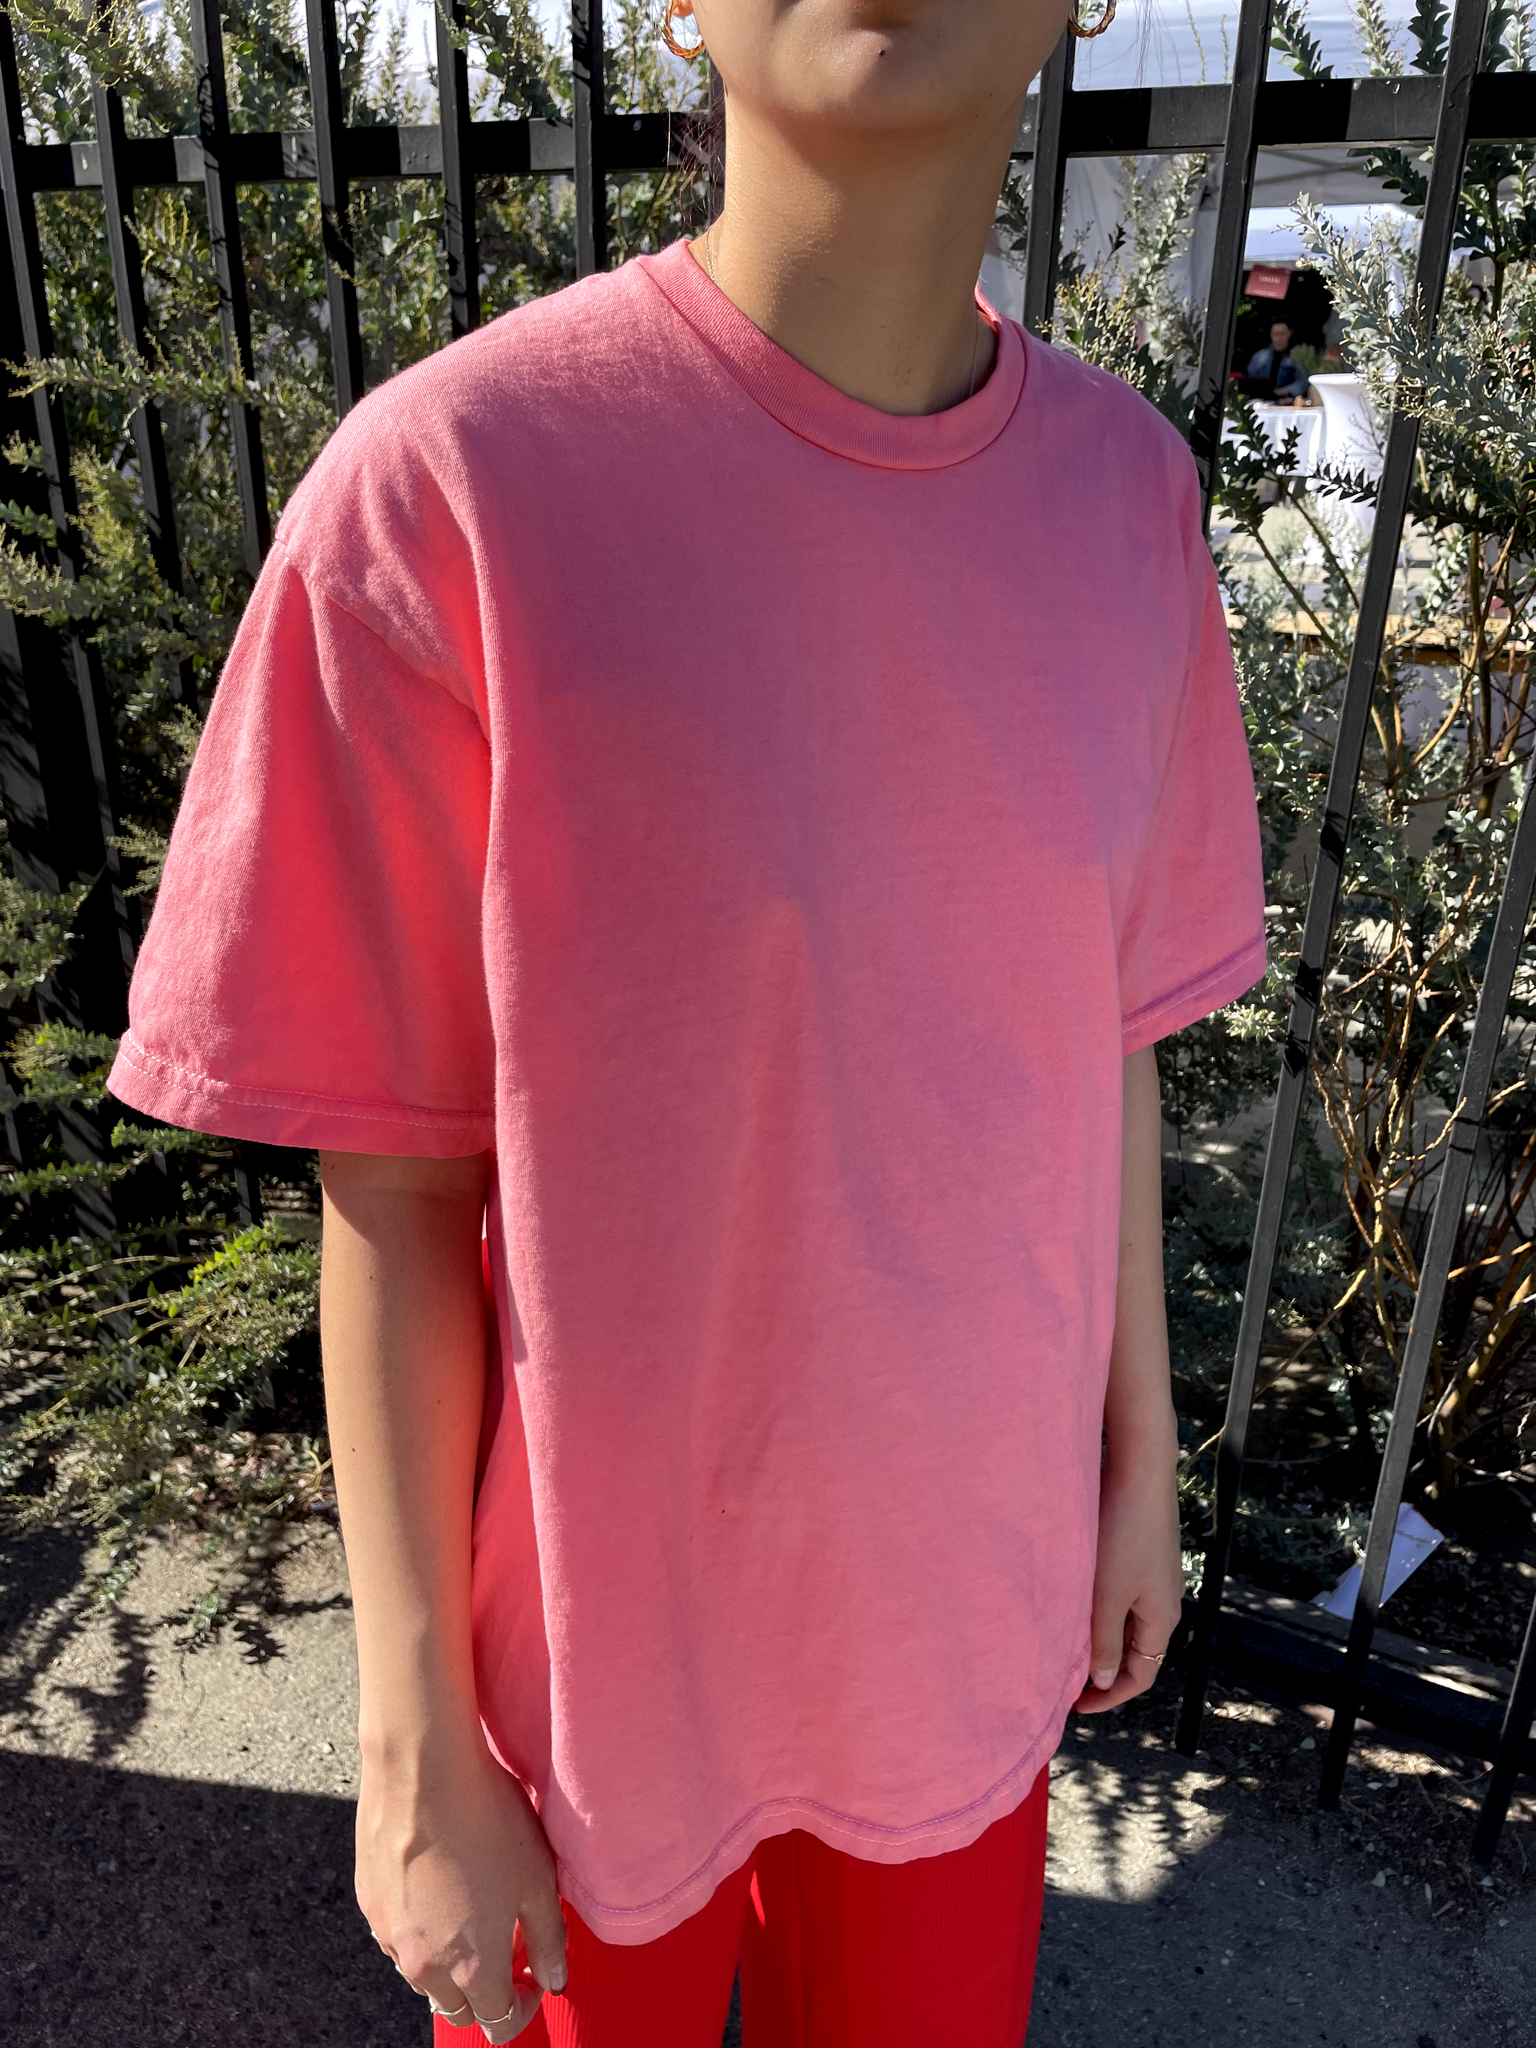 Ben T-Shirt in Pink Oyster Mushroom